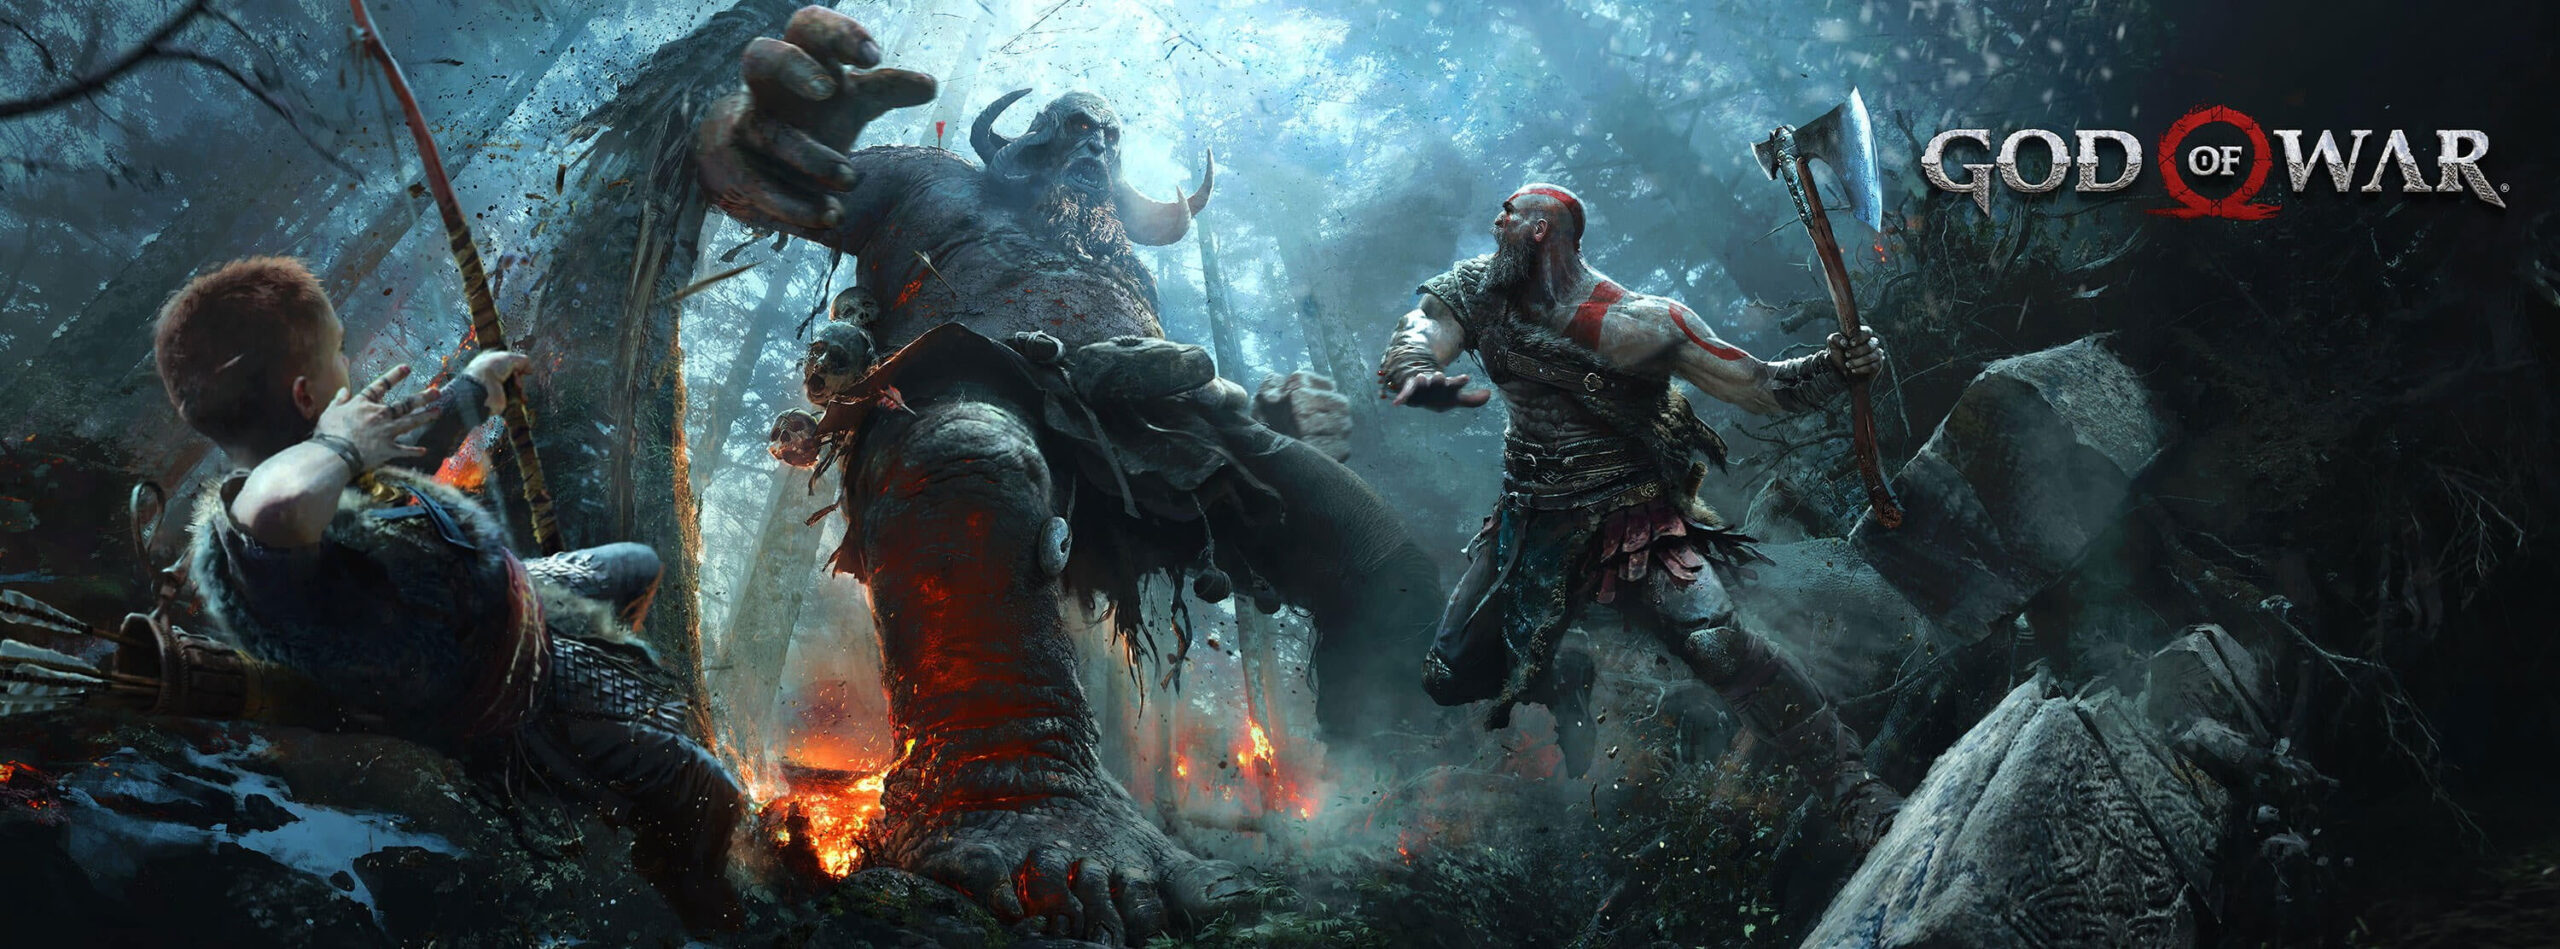 God Of War Digital Wallpaper, Kratos